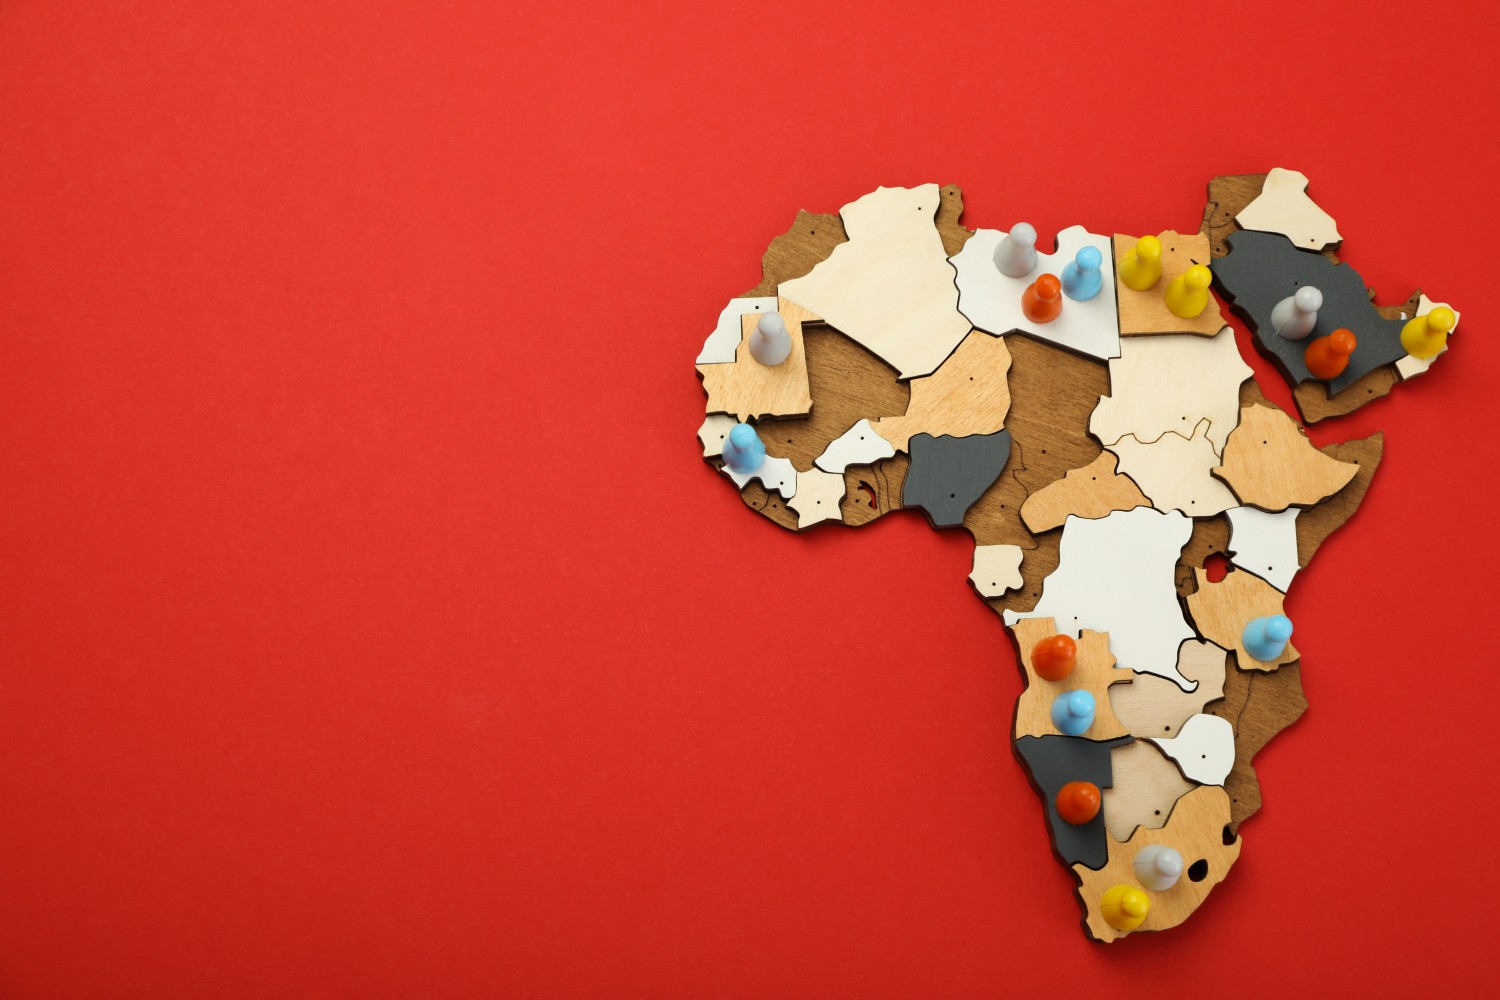 African Antitrust Regulators Plan to Monitor Big Techs in Working Group